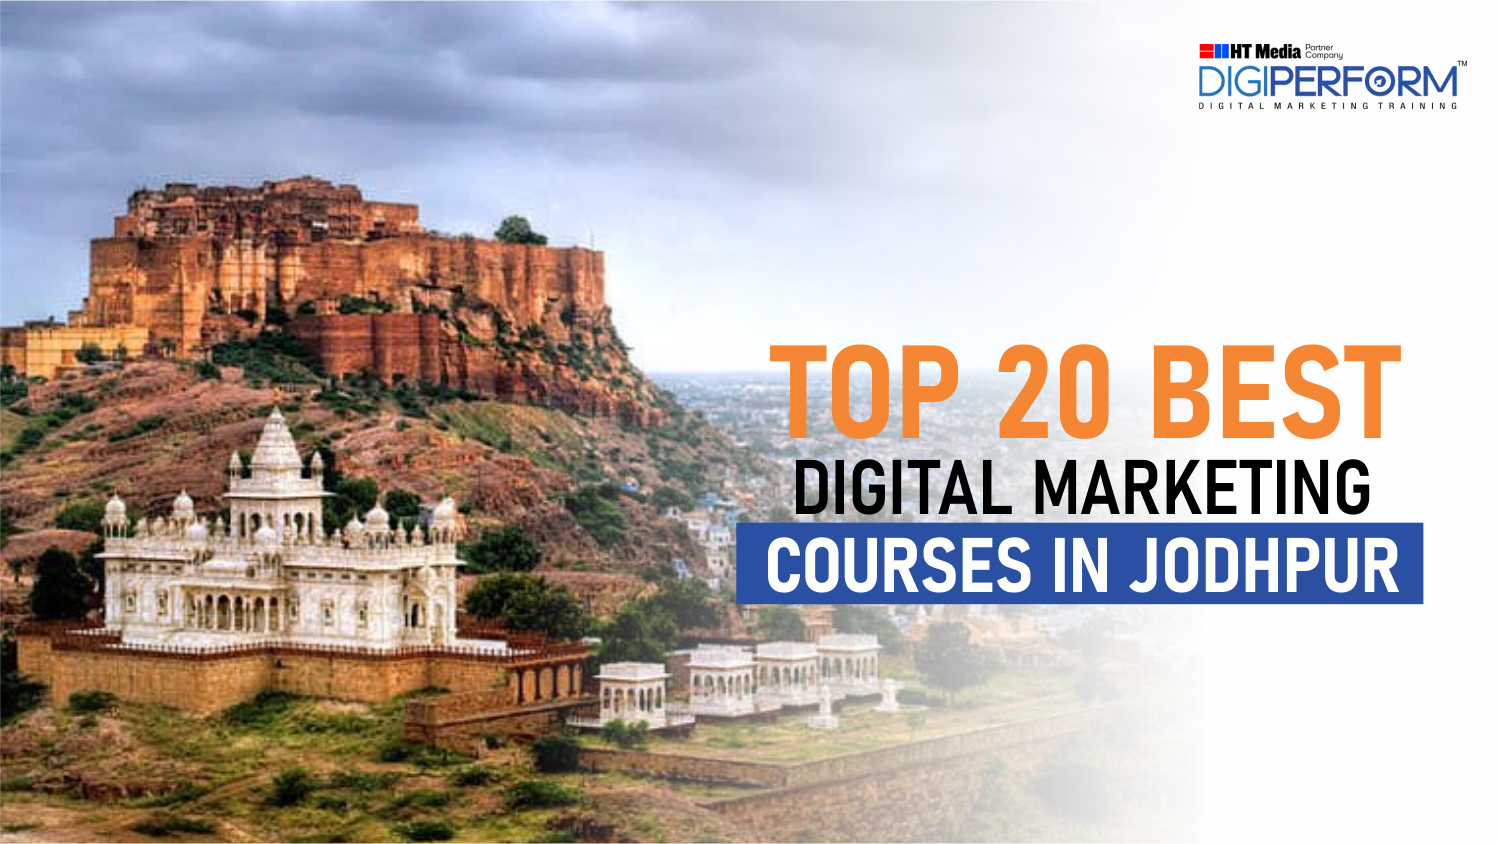 Top 20 Best Digital Marketing Courses in Jodhpur